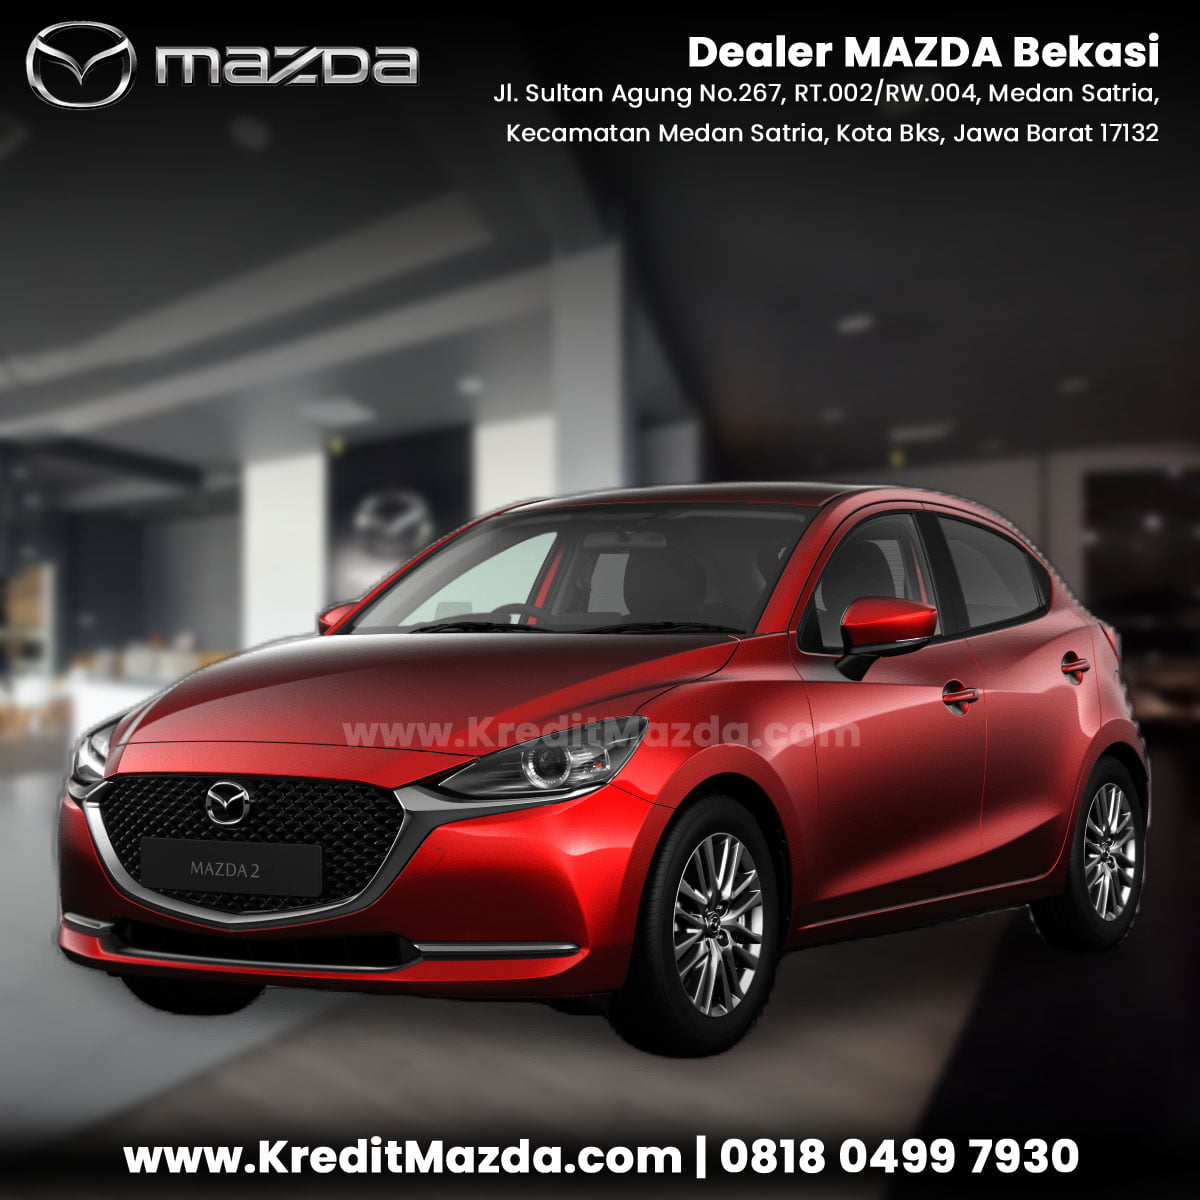 new mazda2 hatchback homepage